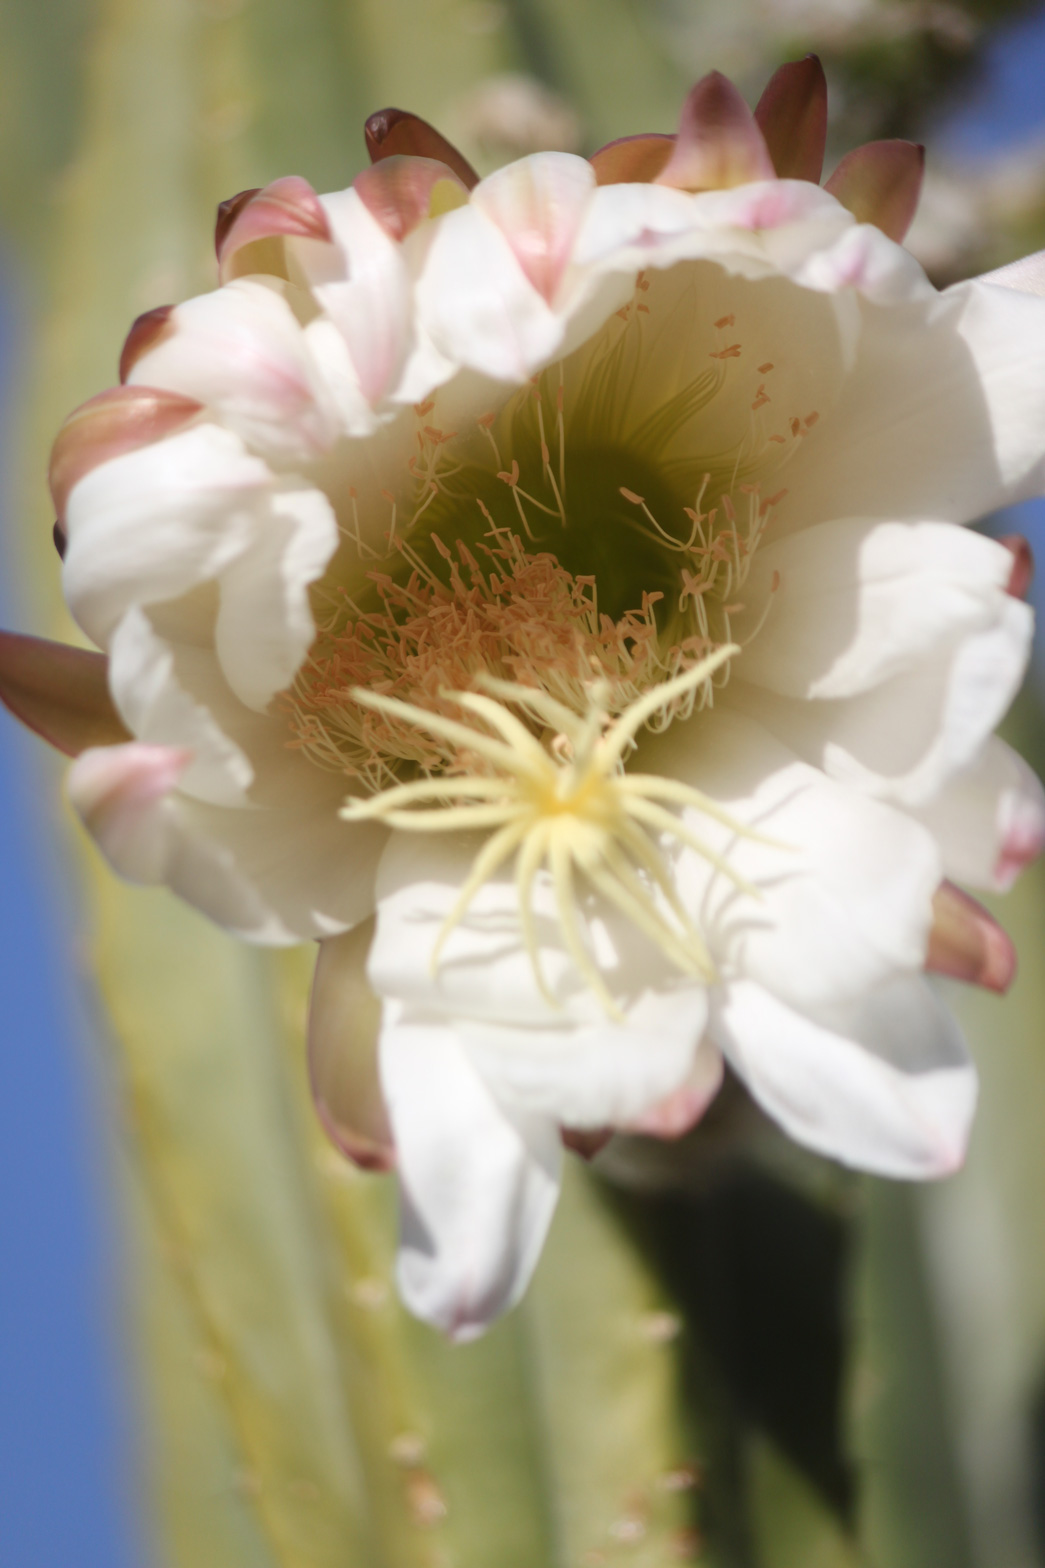 A close-up of a San Pedro bloom.